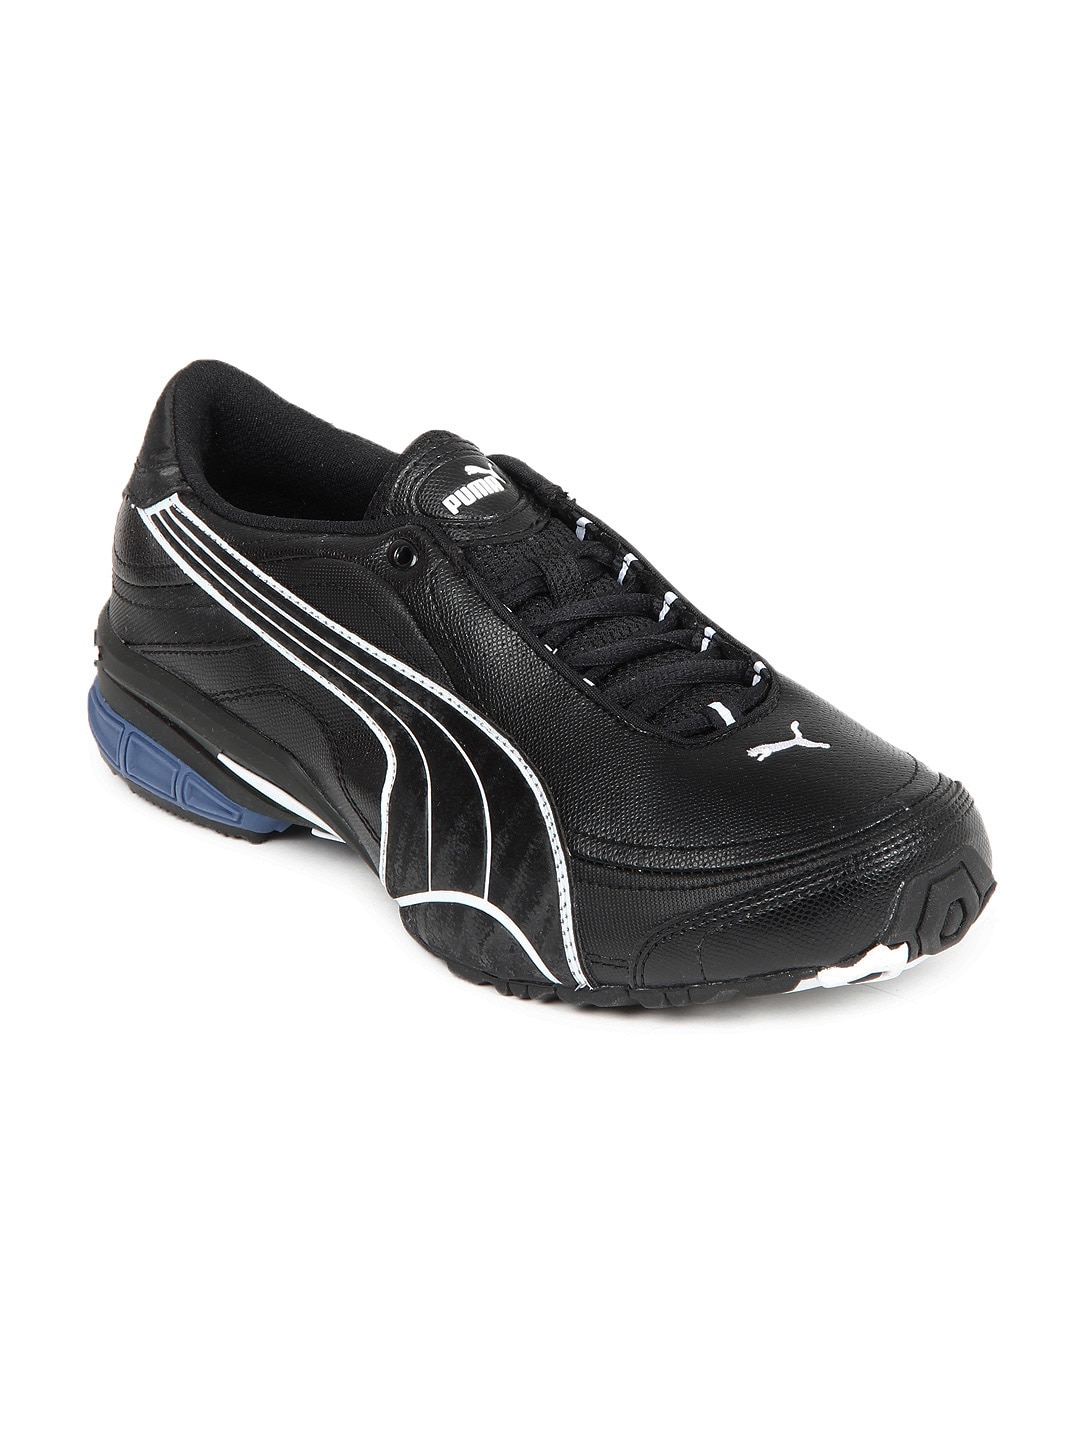 Puma Men Tazon II Black Sports Shoes